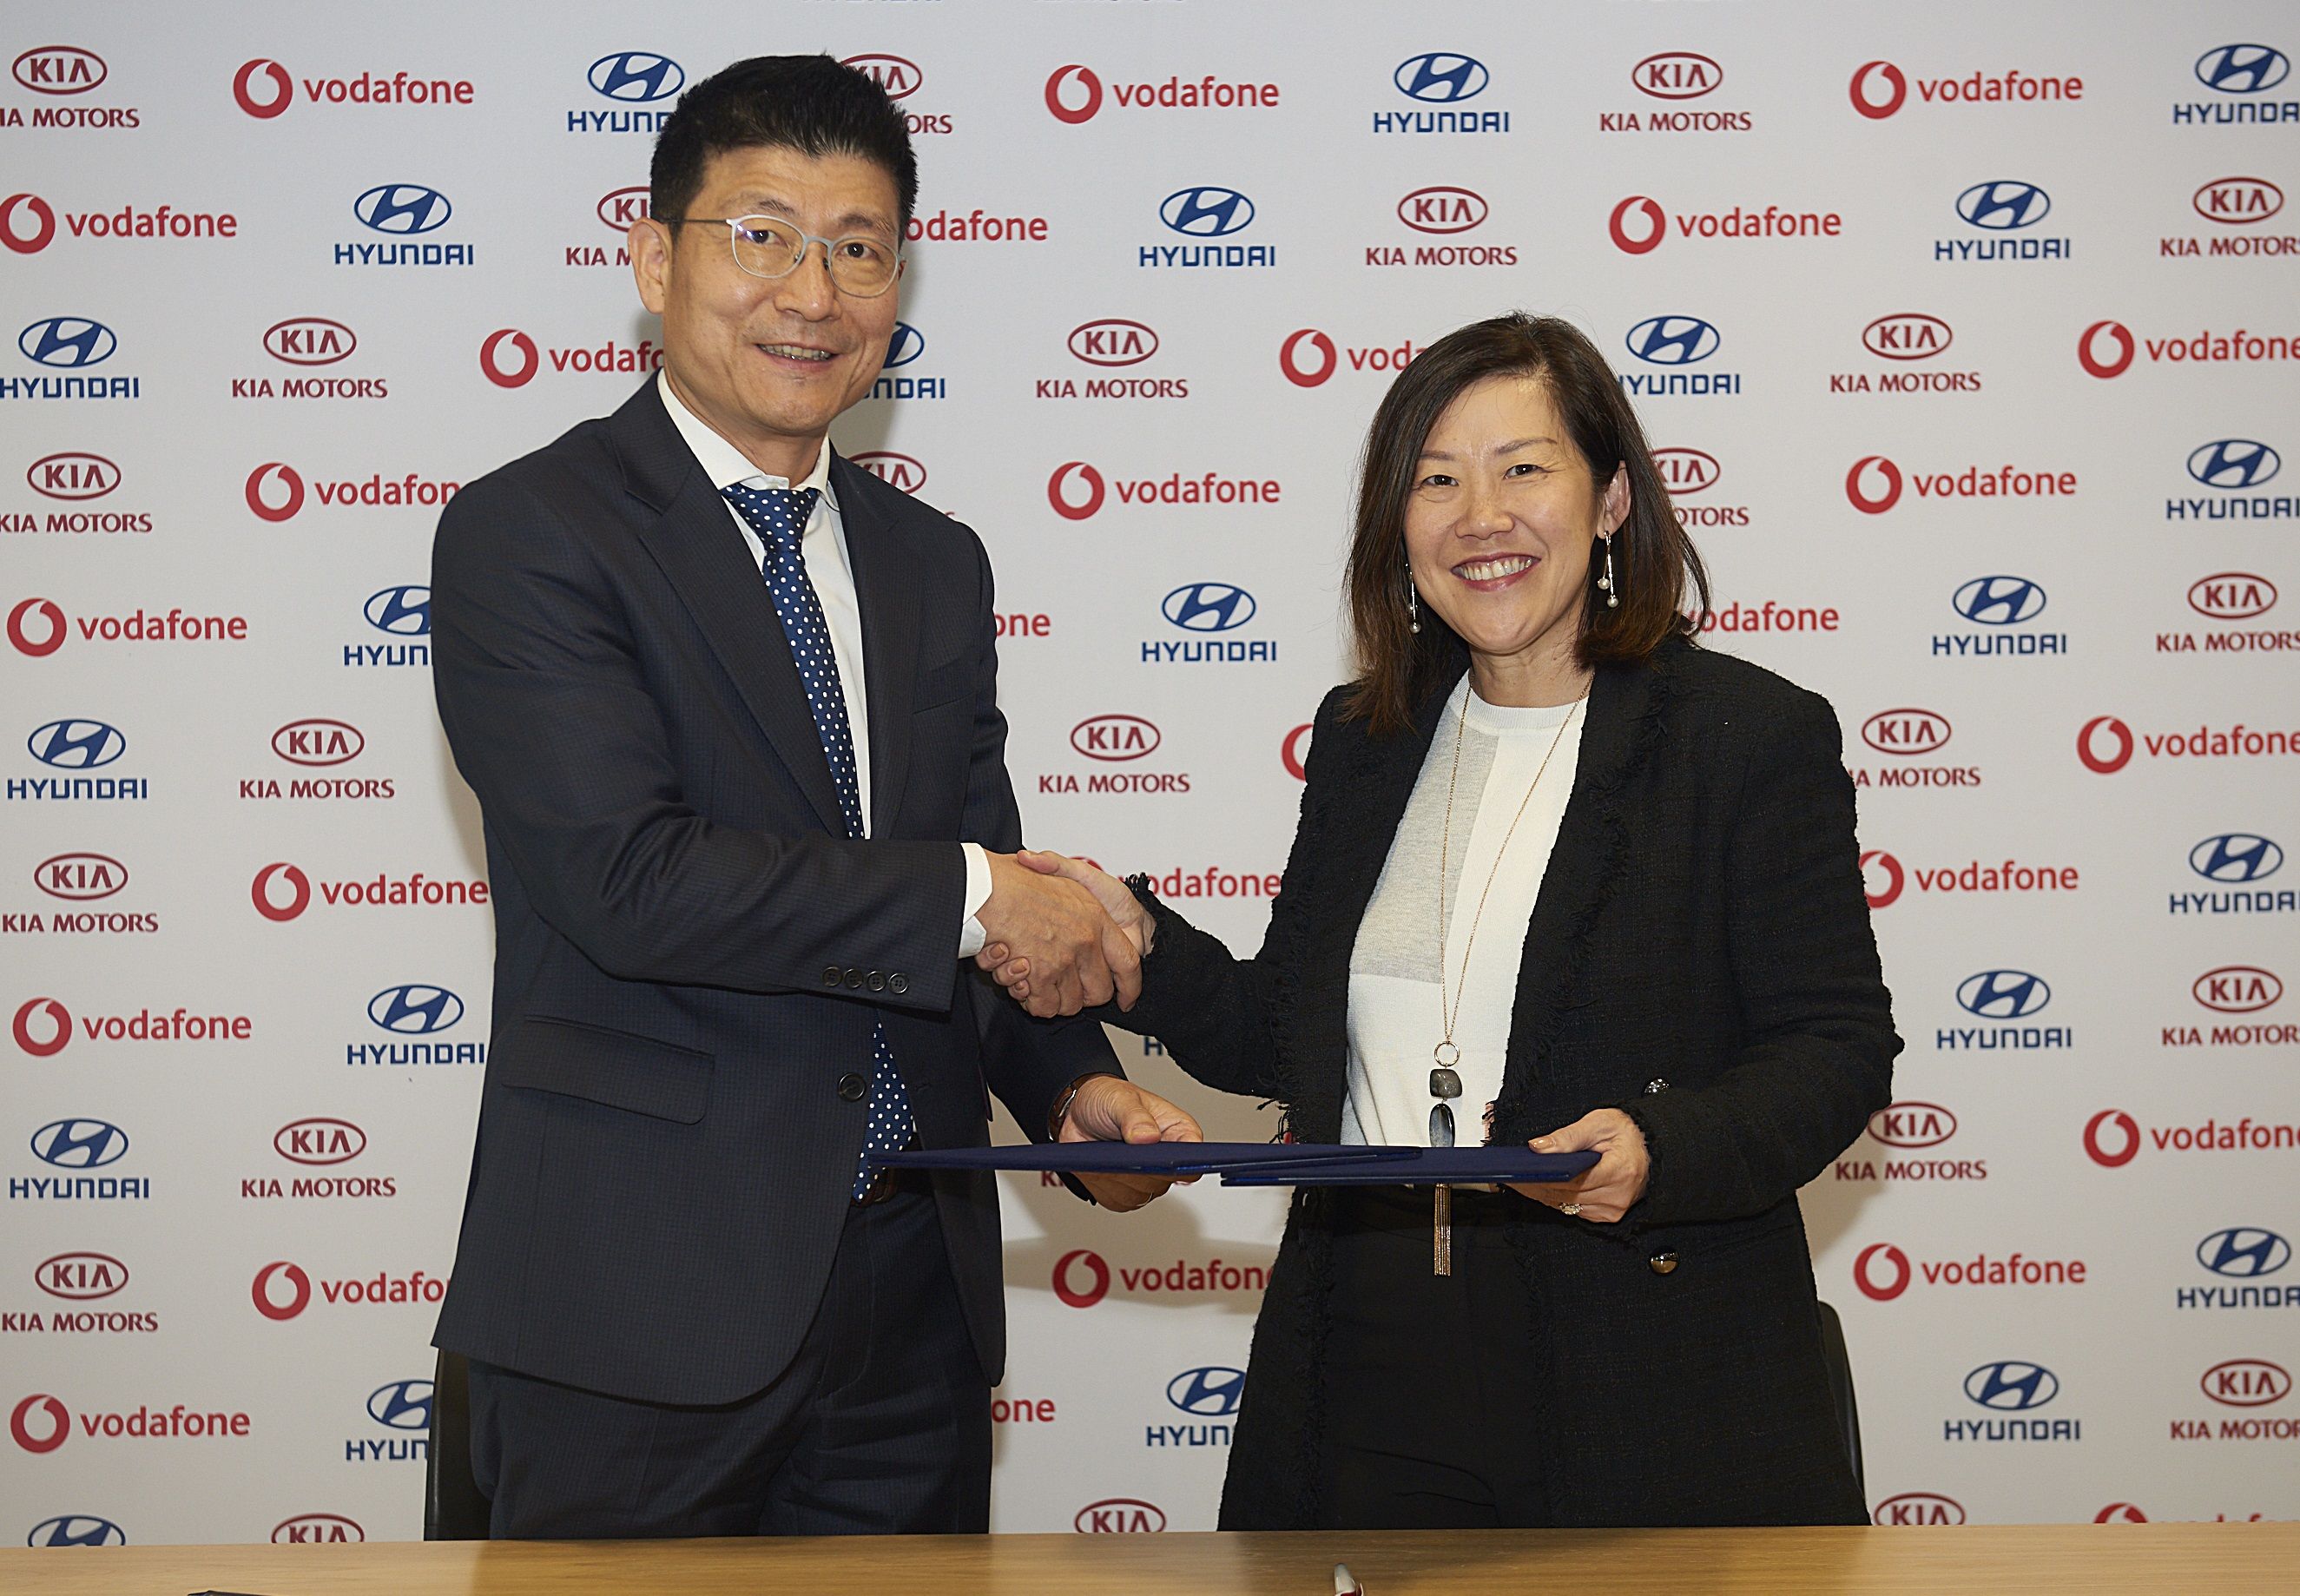 Hyundai and Kia Enter Strategic Partnership with Vodafone